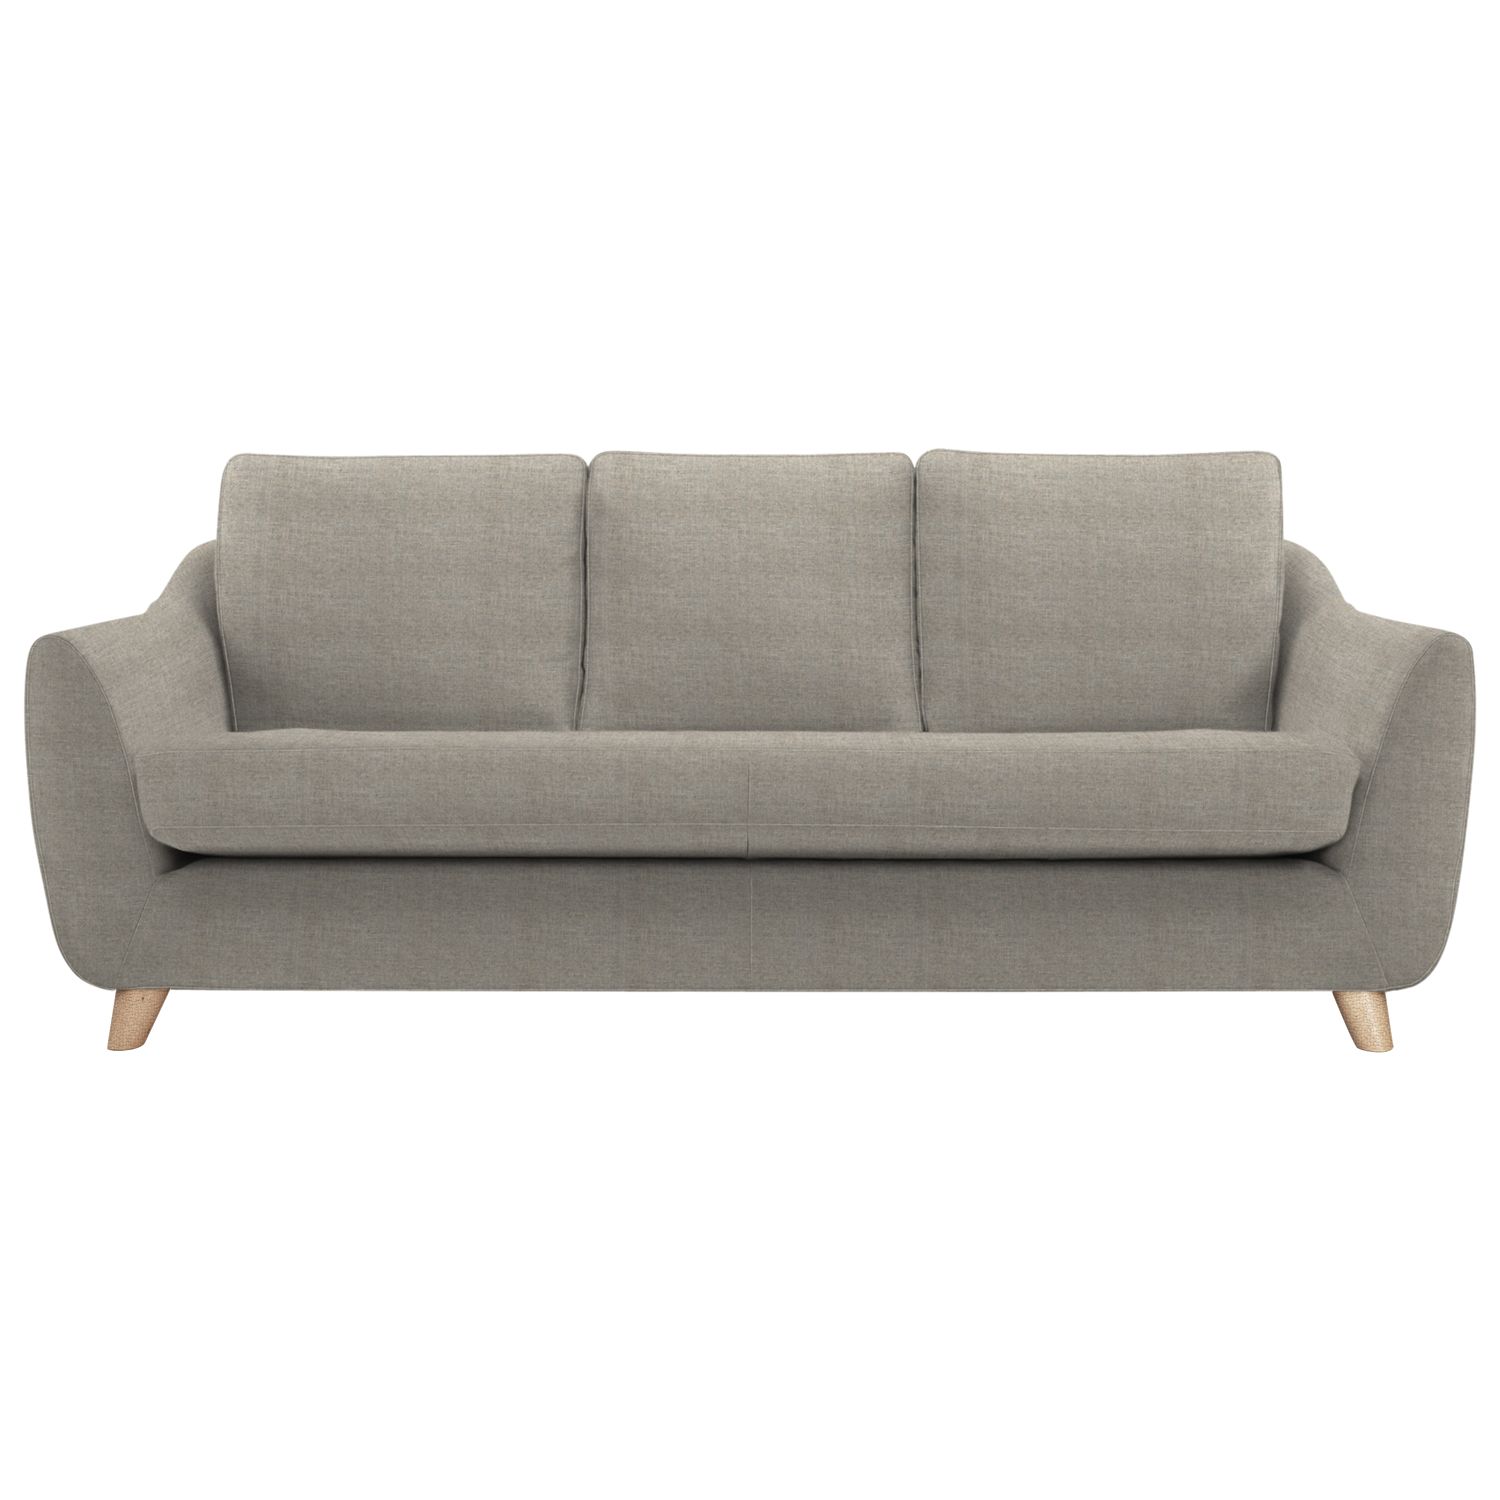 G Plan Vintage The Sixty Seven Large Sofa, Fleck Grey, width 208cm